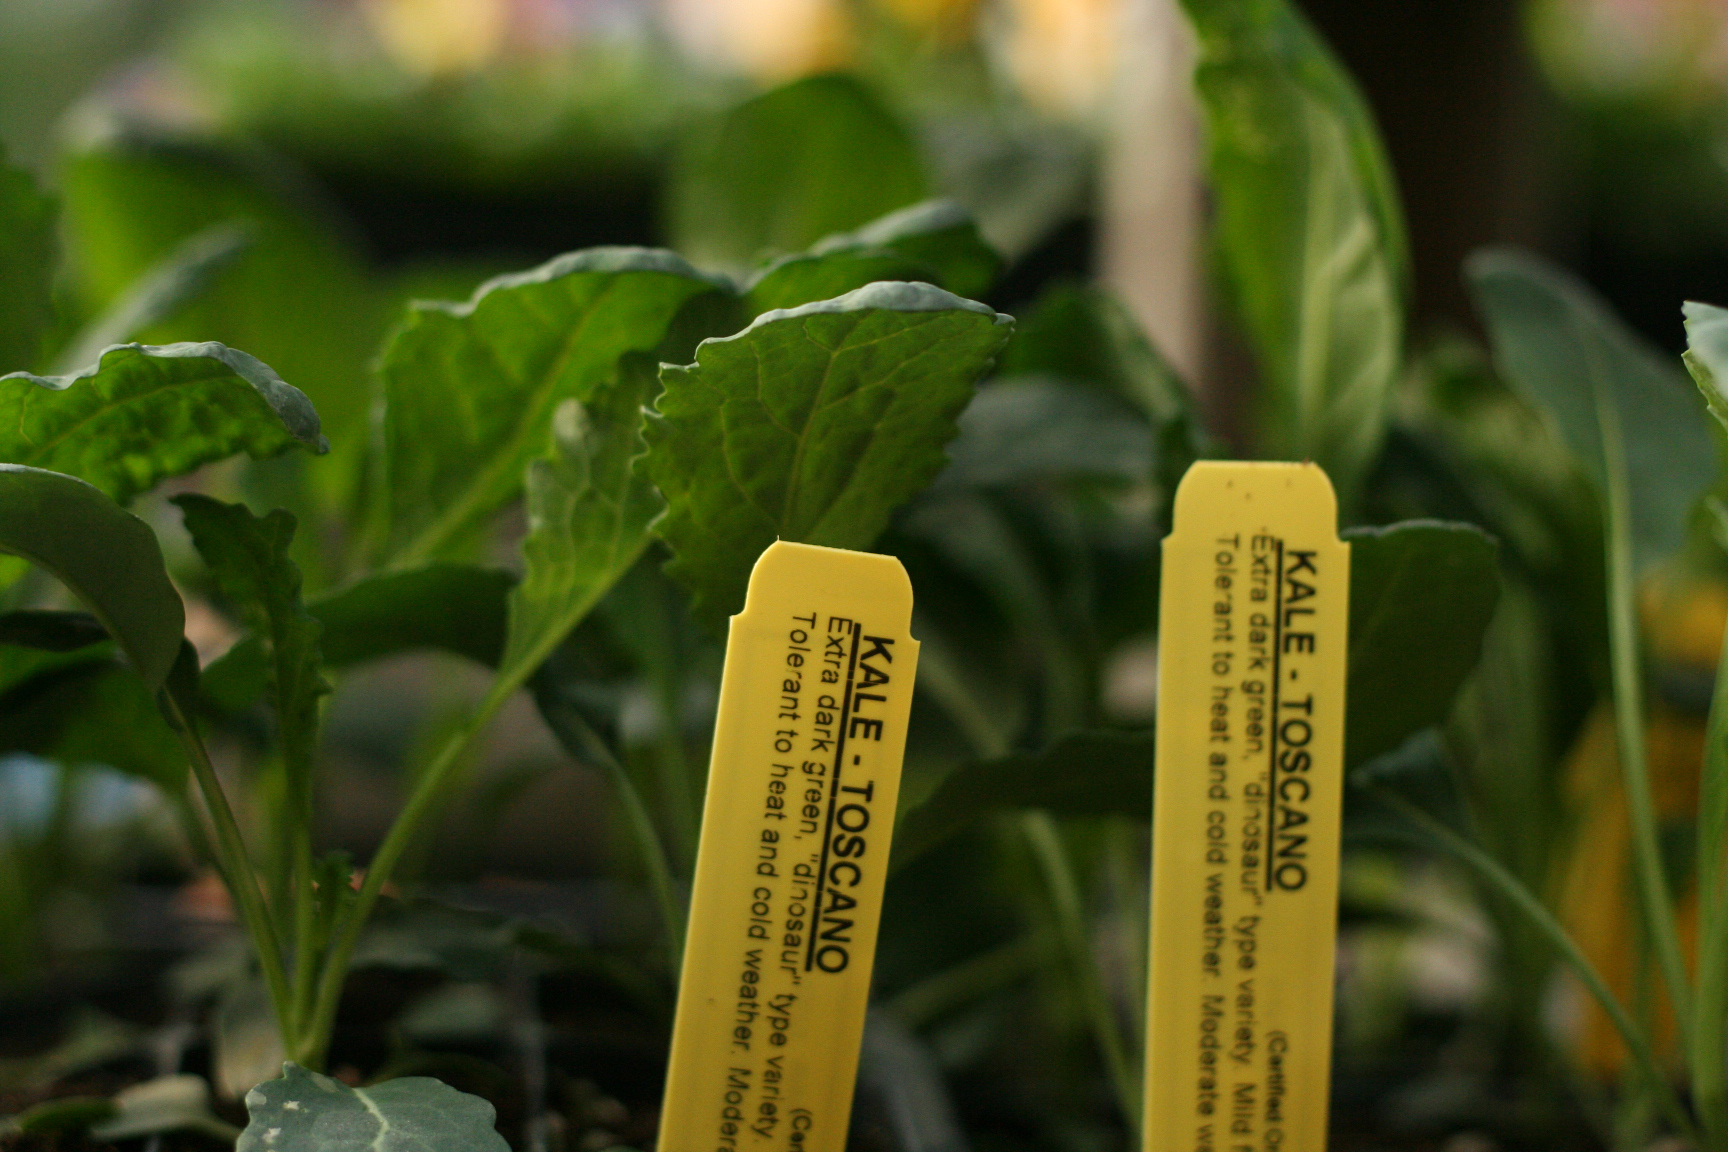 Wisconsin Residents Turn To Vegetable Gardening During Coronavirus Pandemic